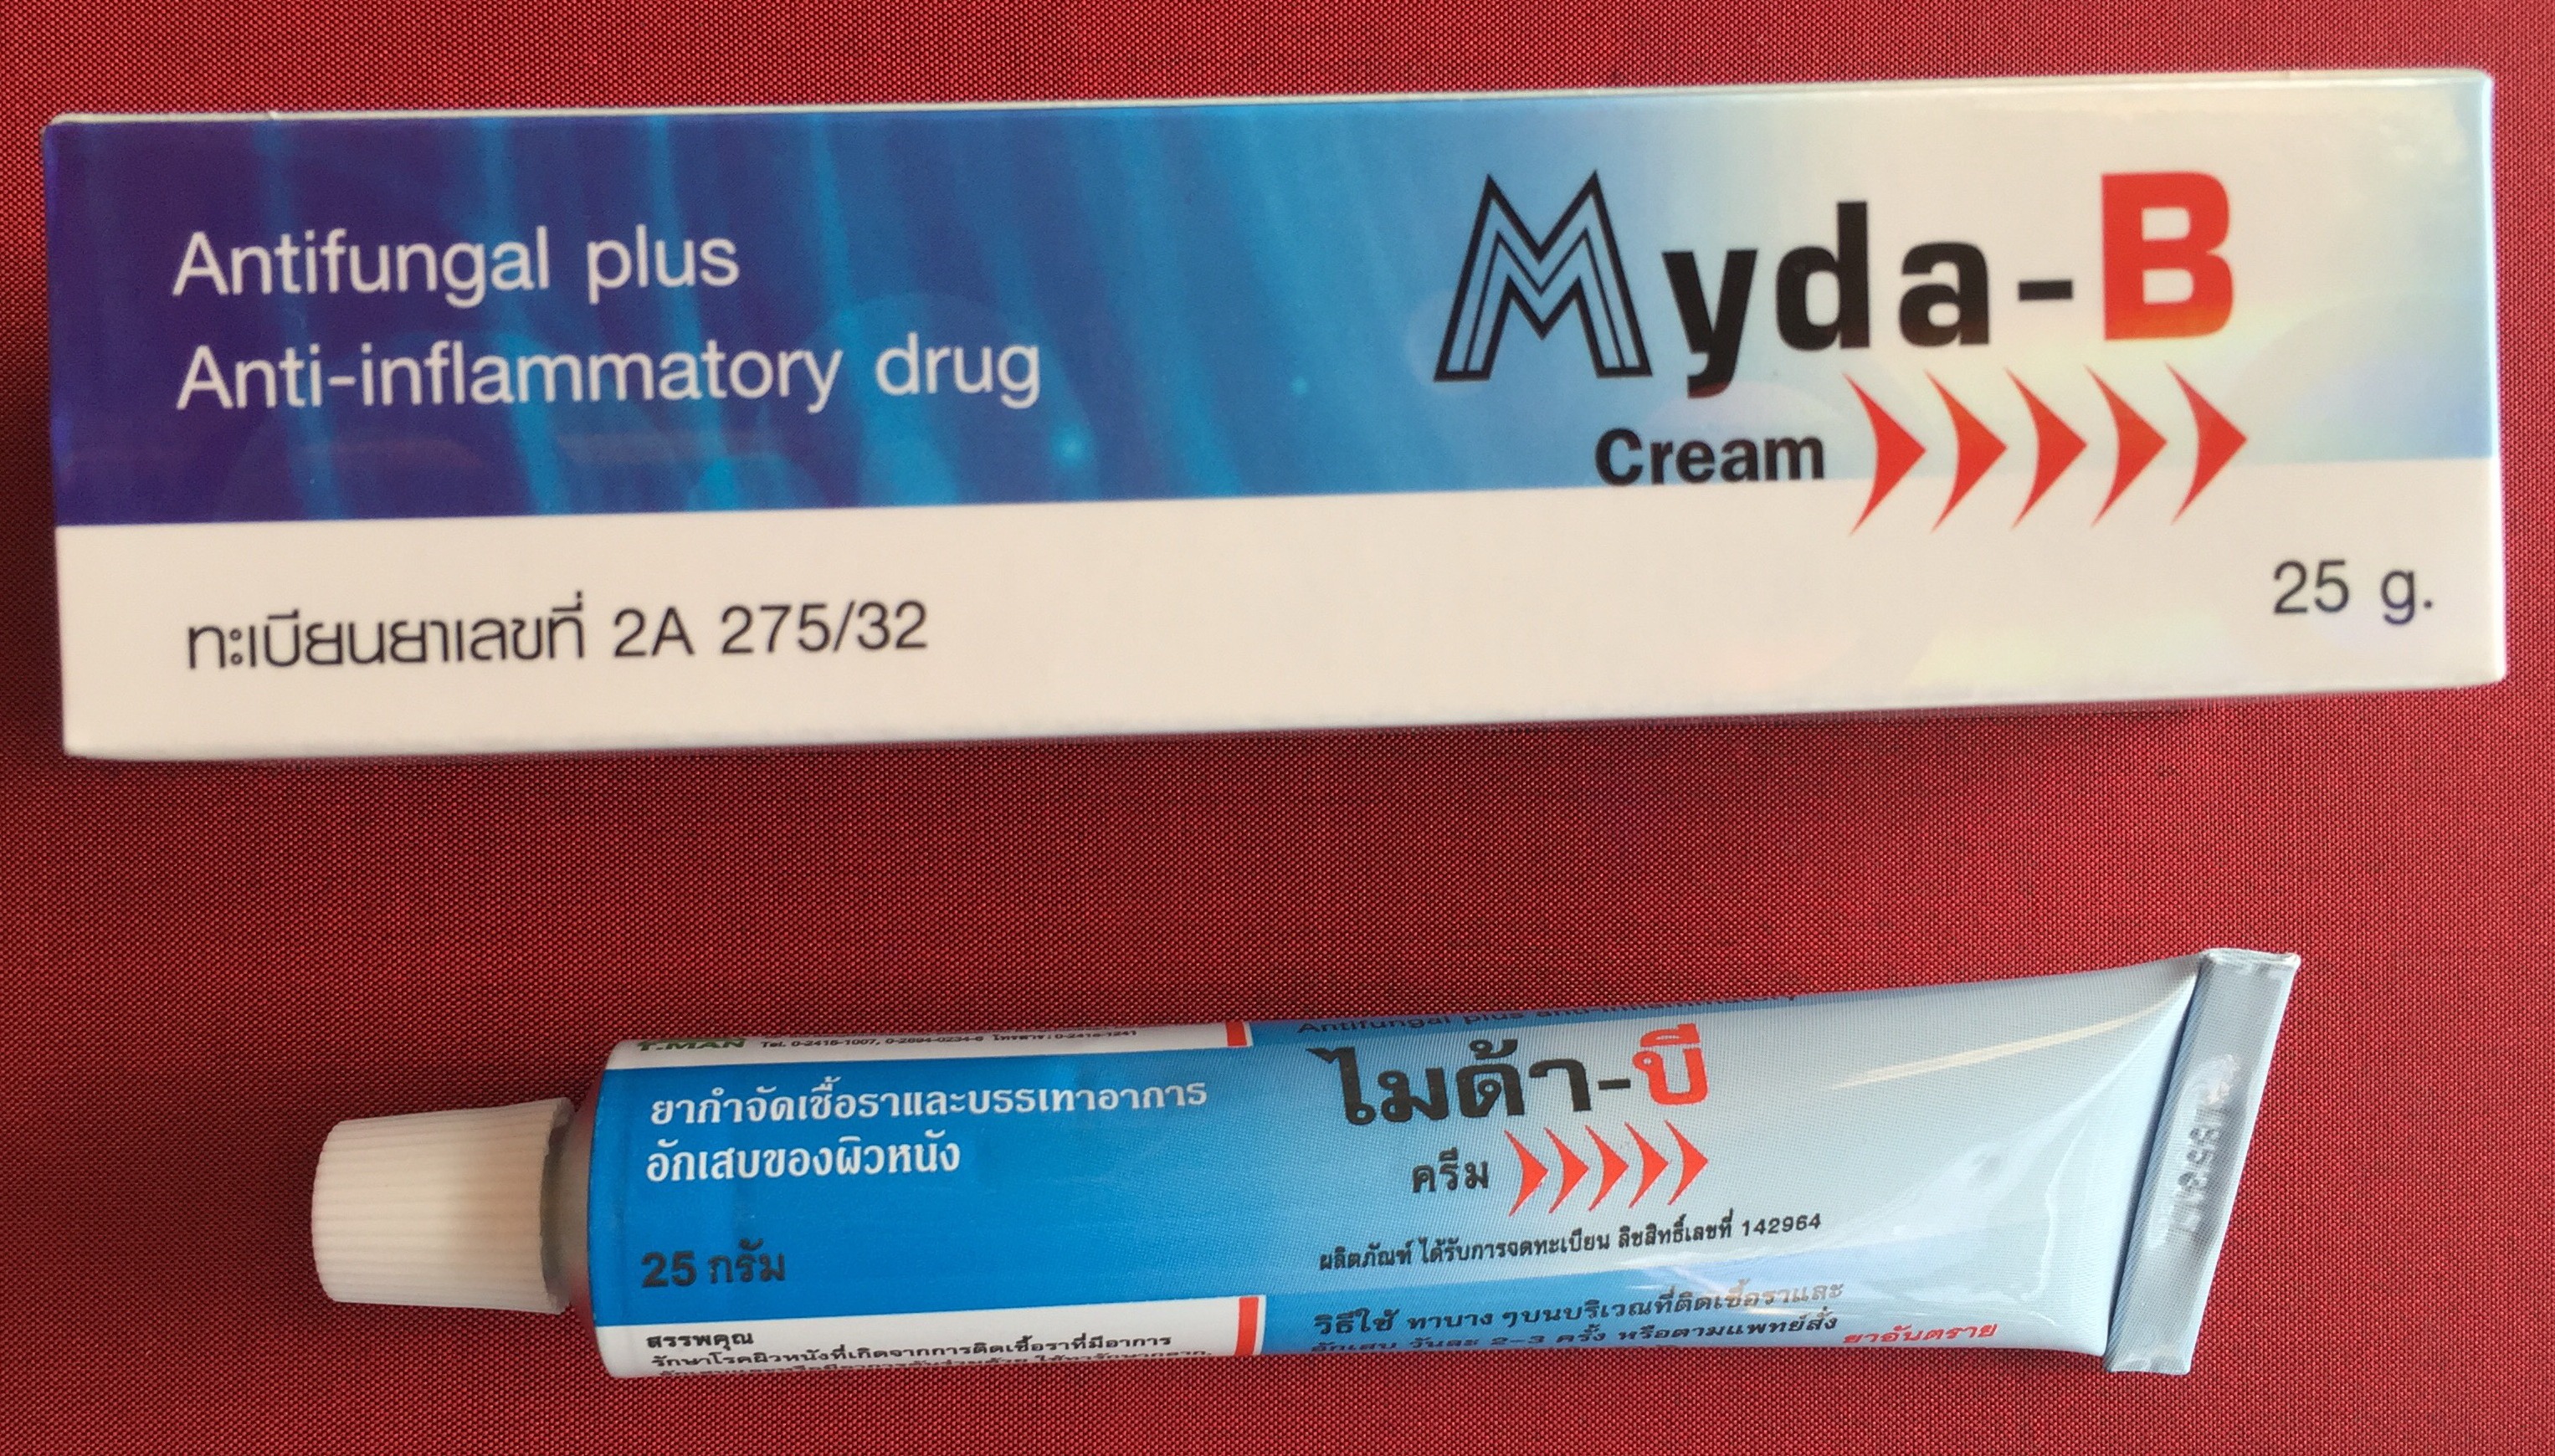 Myda - B Cream - Anti Fungal Plus, Anti-iflammatory -25 gms